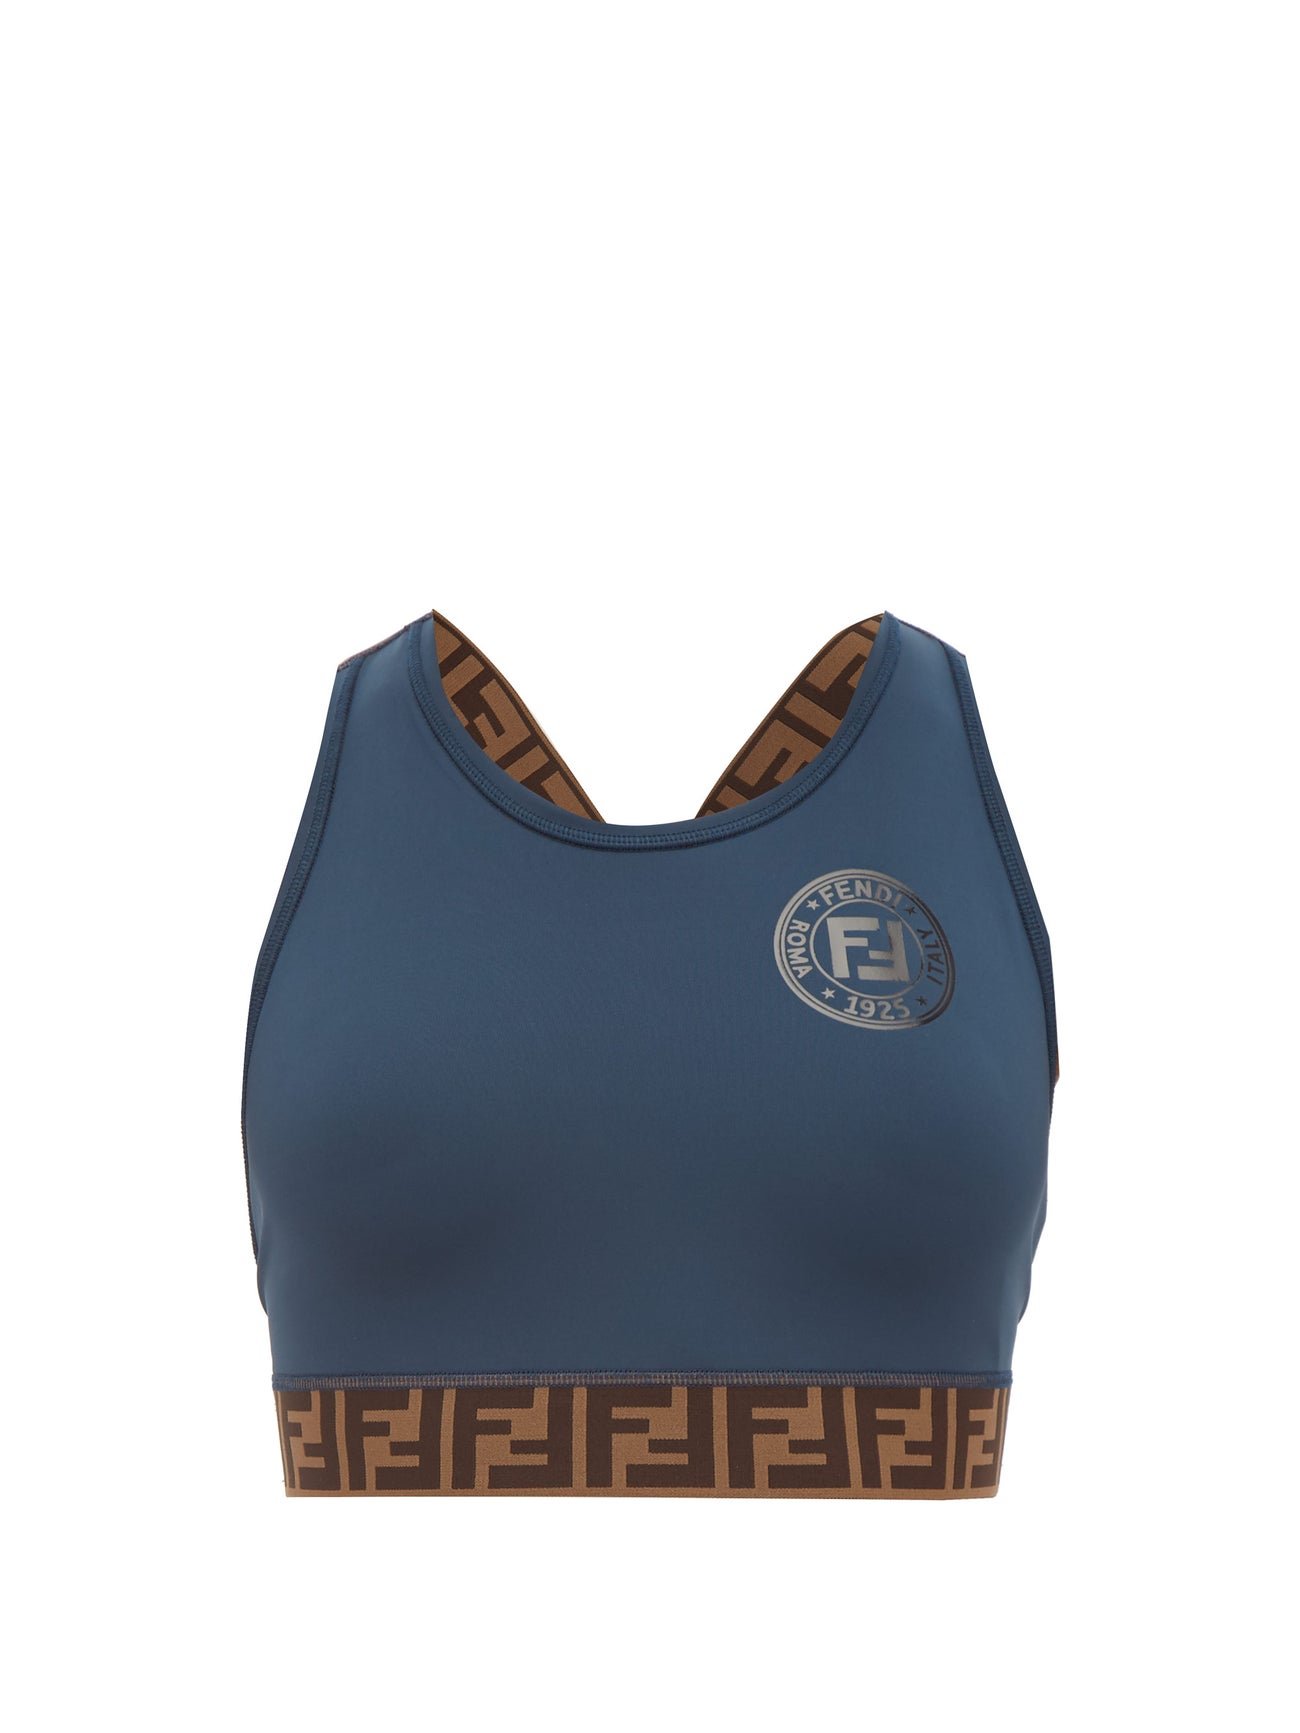 FENDI FF-Logo Stripe Performance Sports Bra in Teal blue